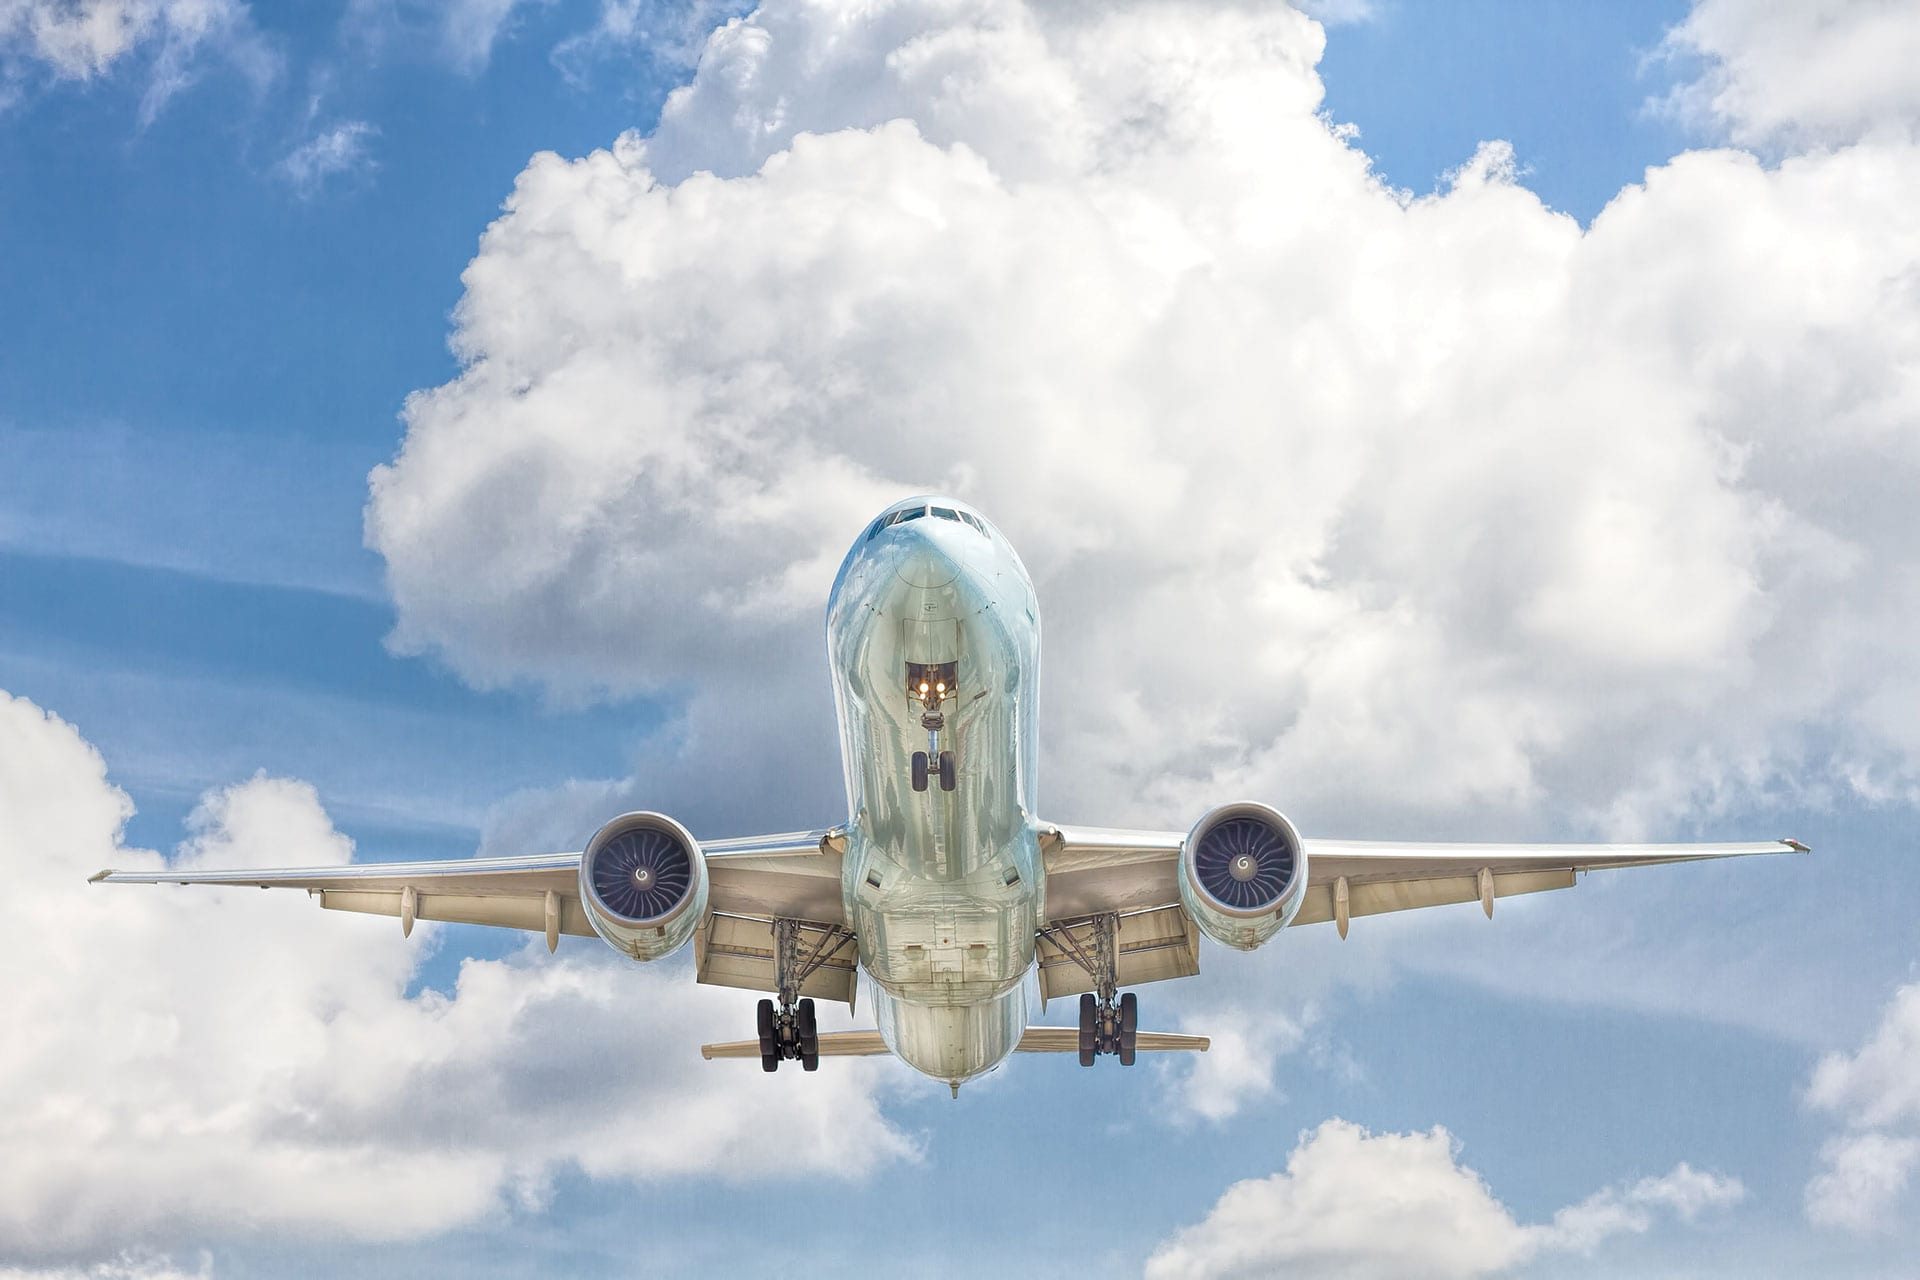 A photo of a jet passenger plane in flight